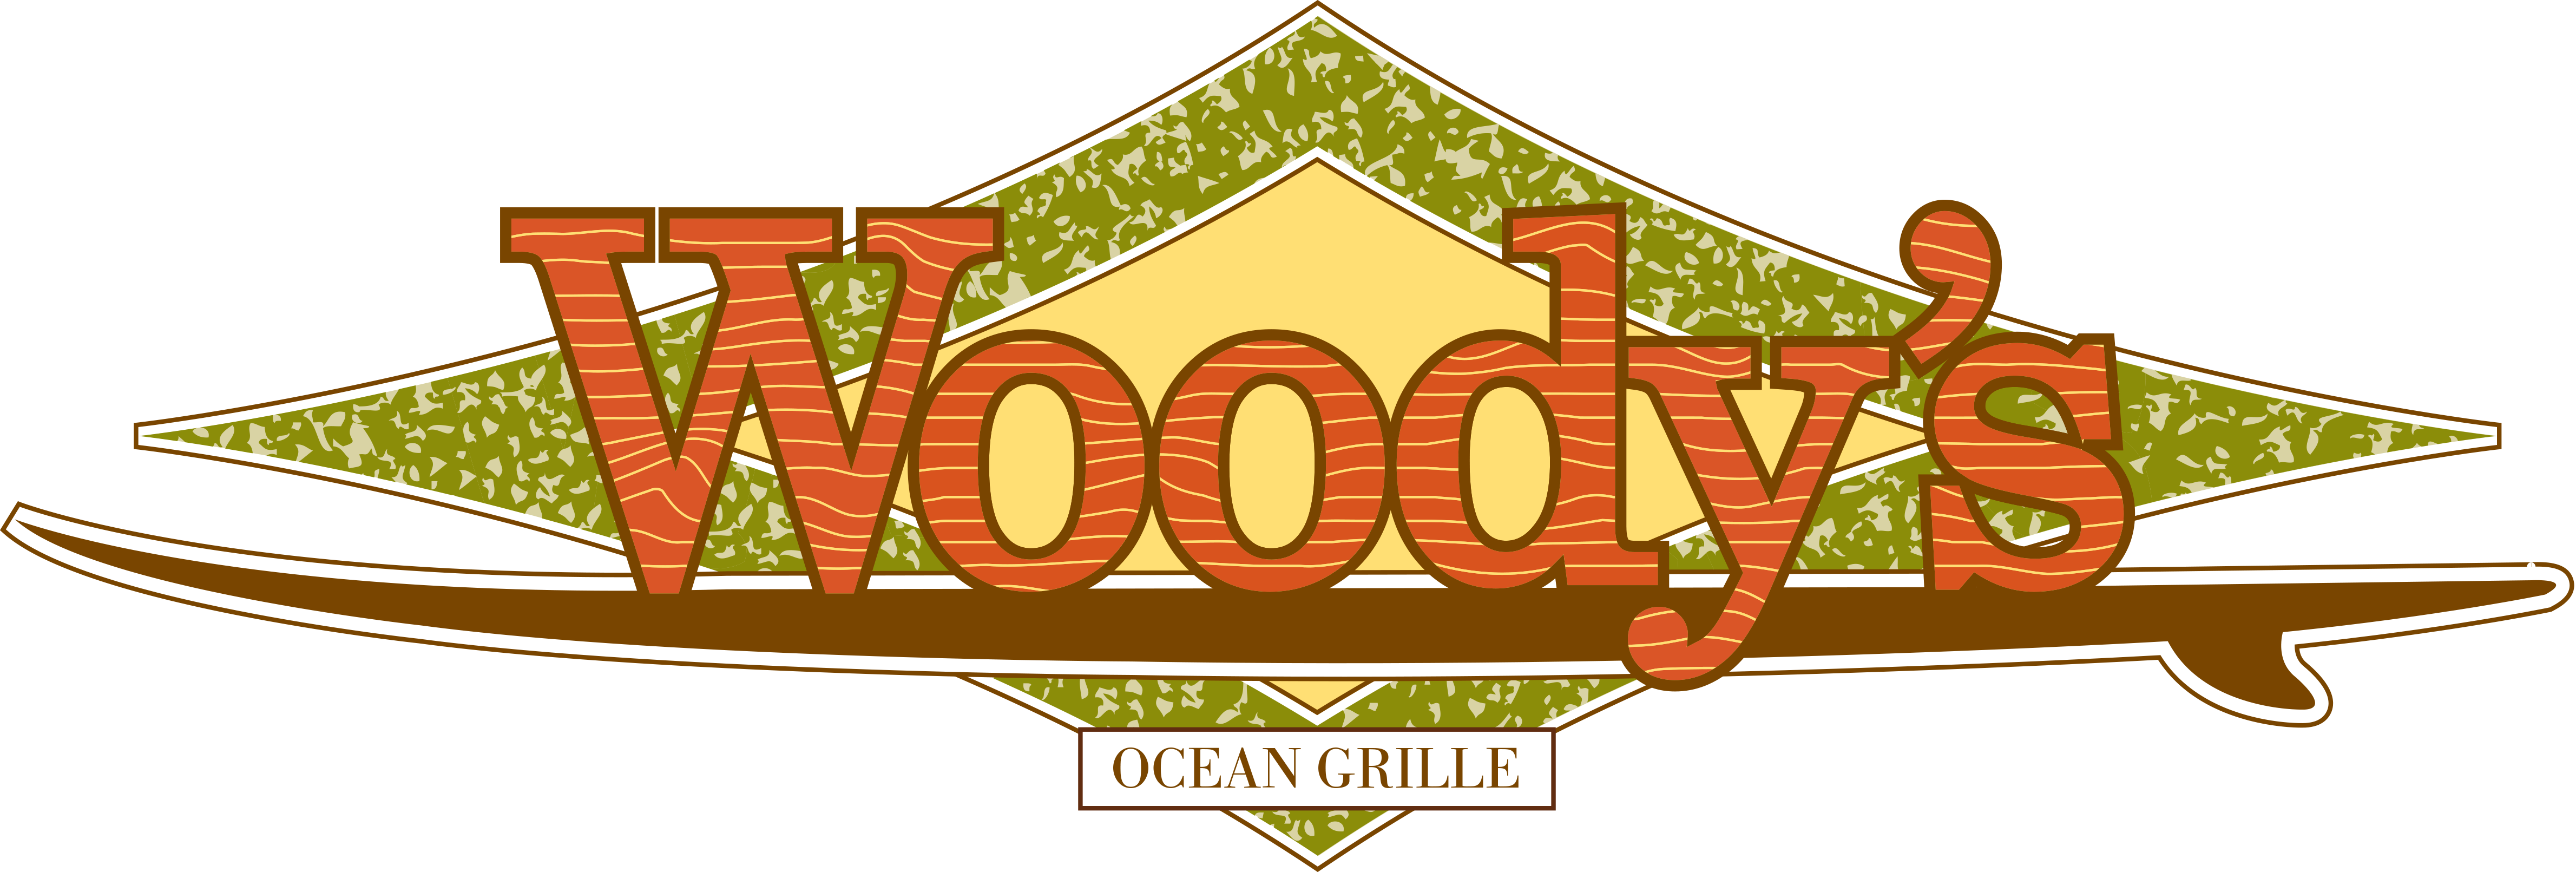 Woody's Ocean Grille - Tinton Falls